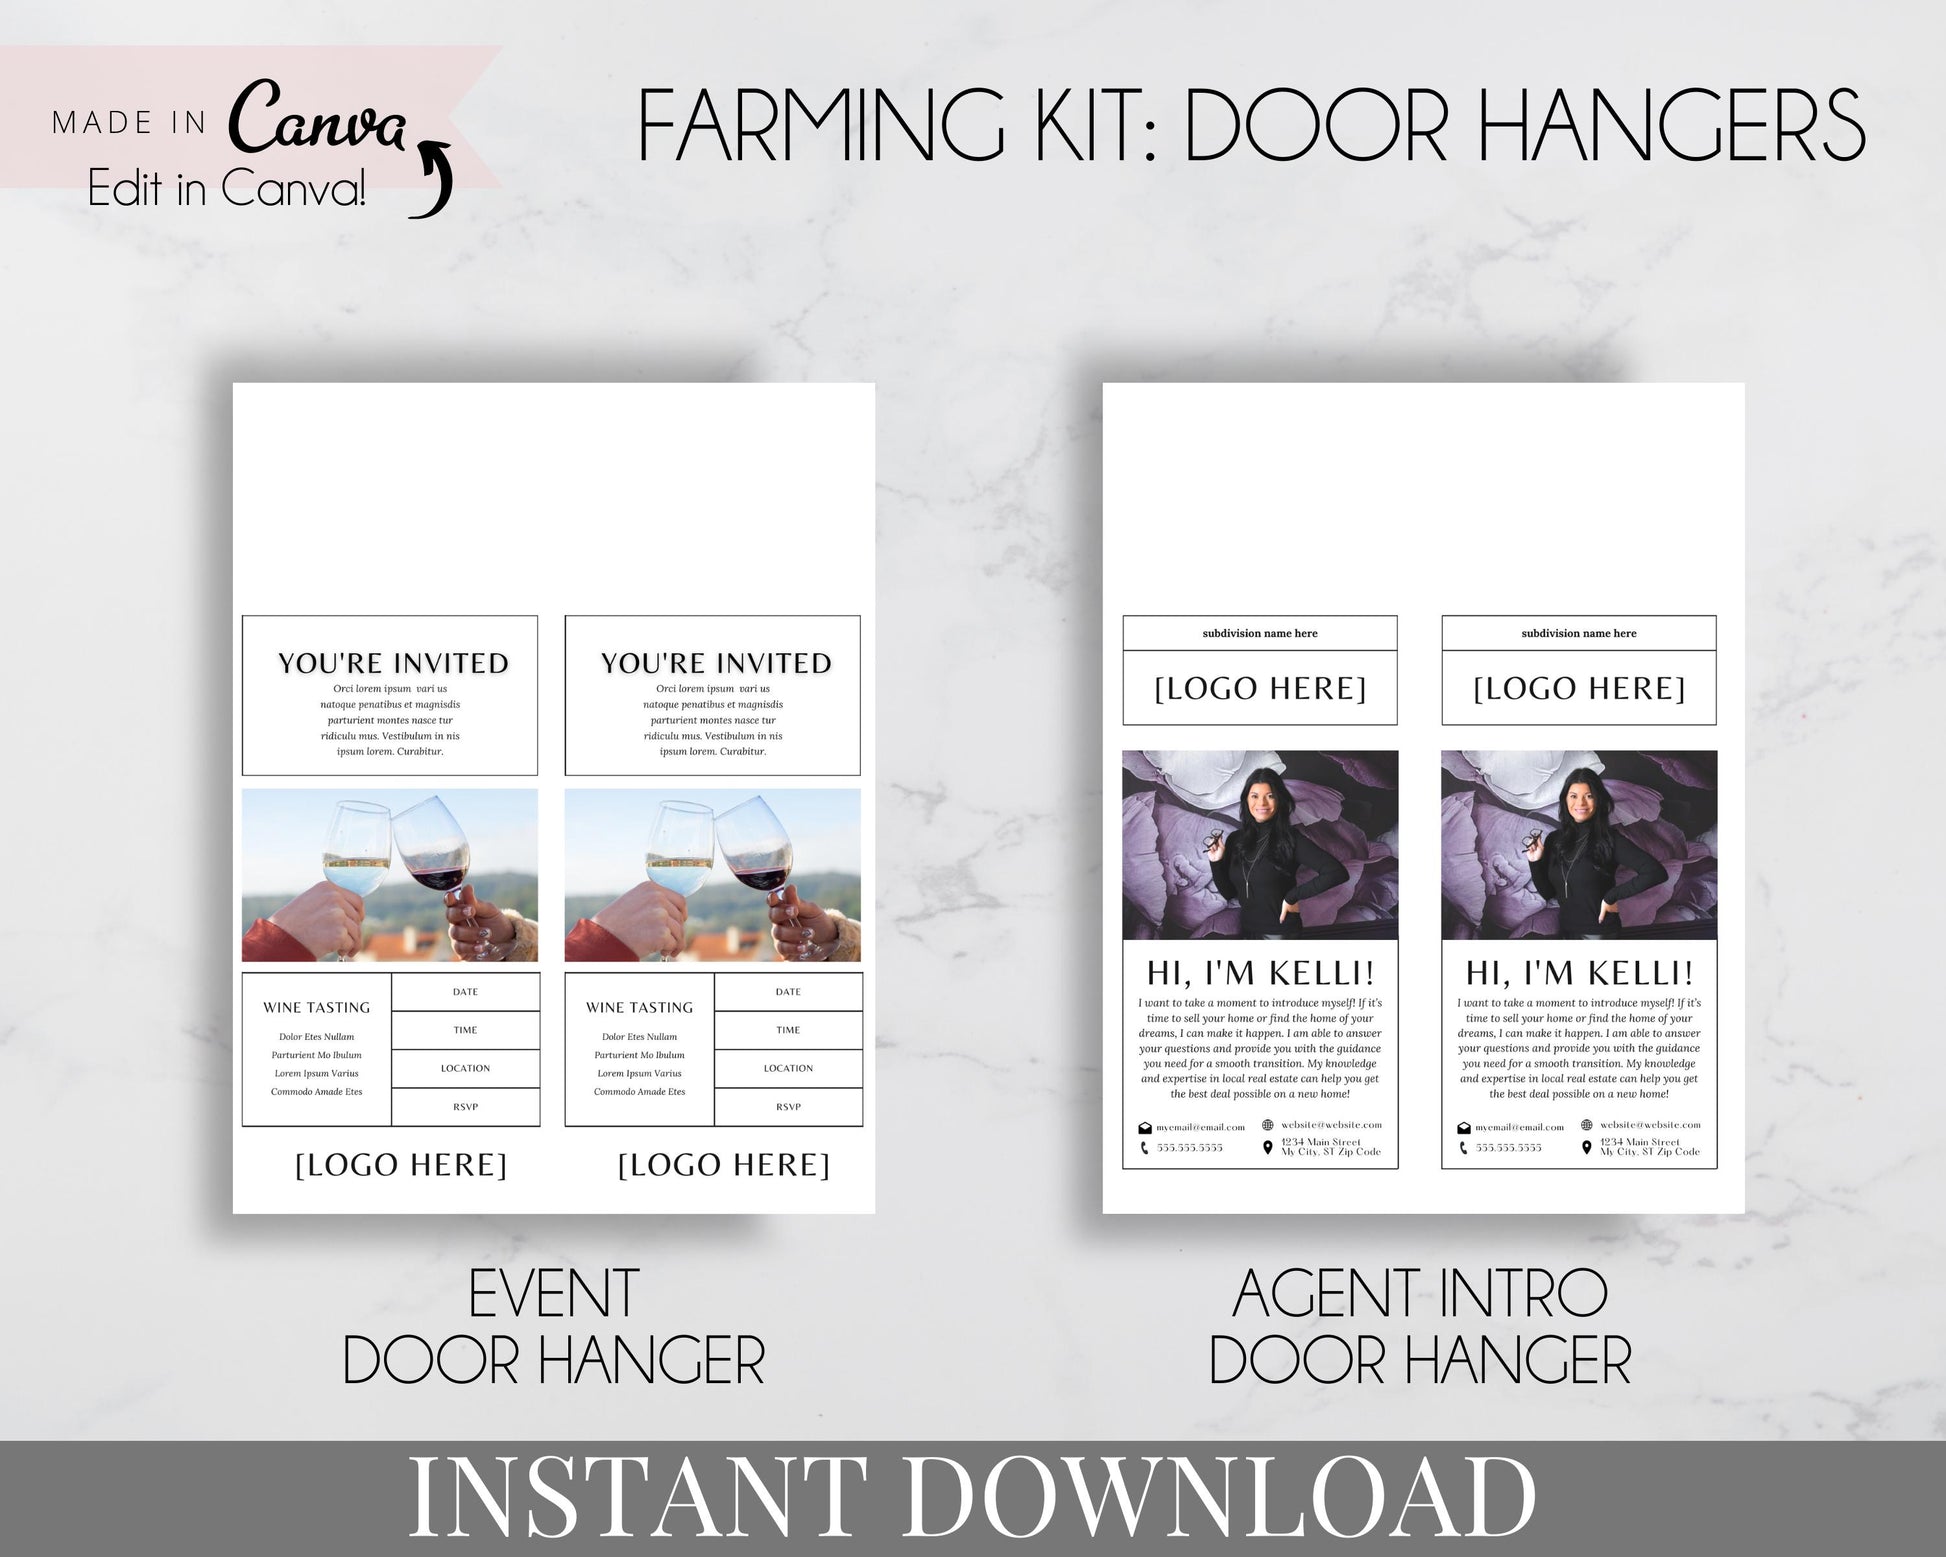 Real Estate Farming Kit Marketing for Realtors, Agents - Instant Download - Farming Kit Door Hanger Templates - Event Door Hanger - Agent Intro Door Hanger